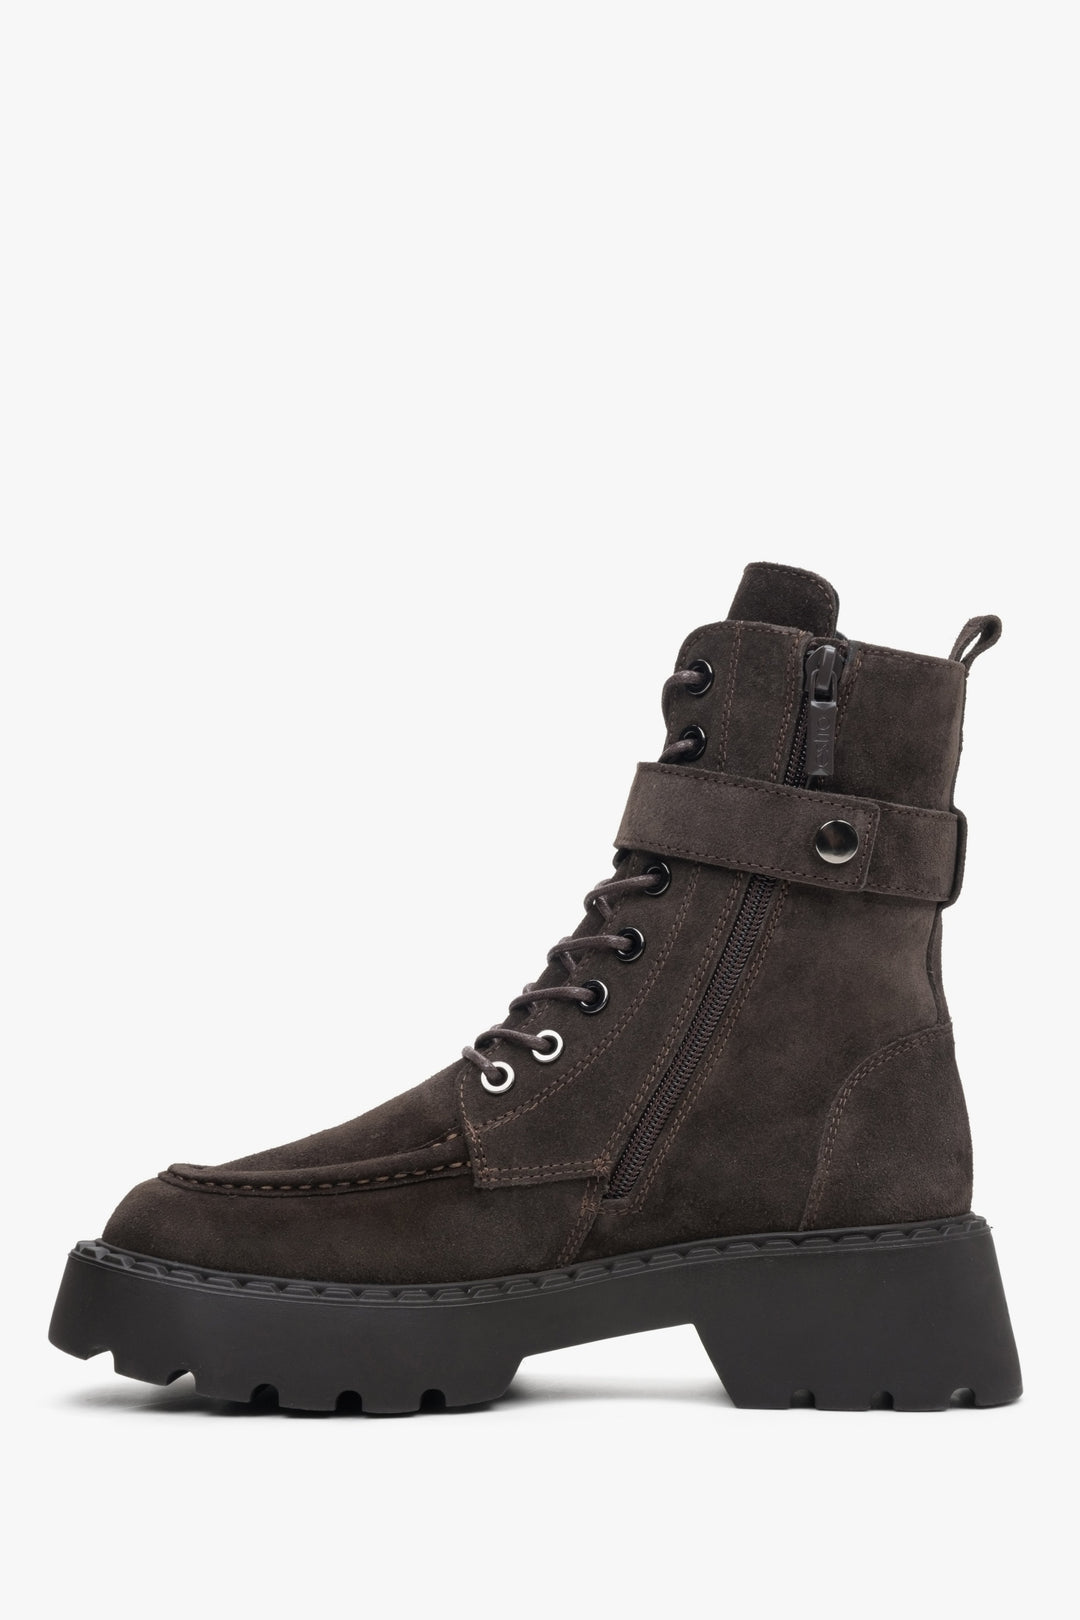 Women's high dark brown velour boots by Estro - shoe profile.